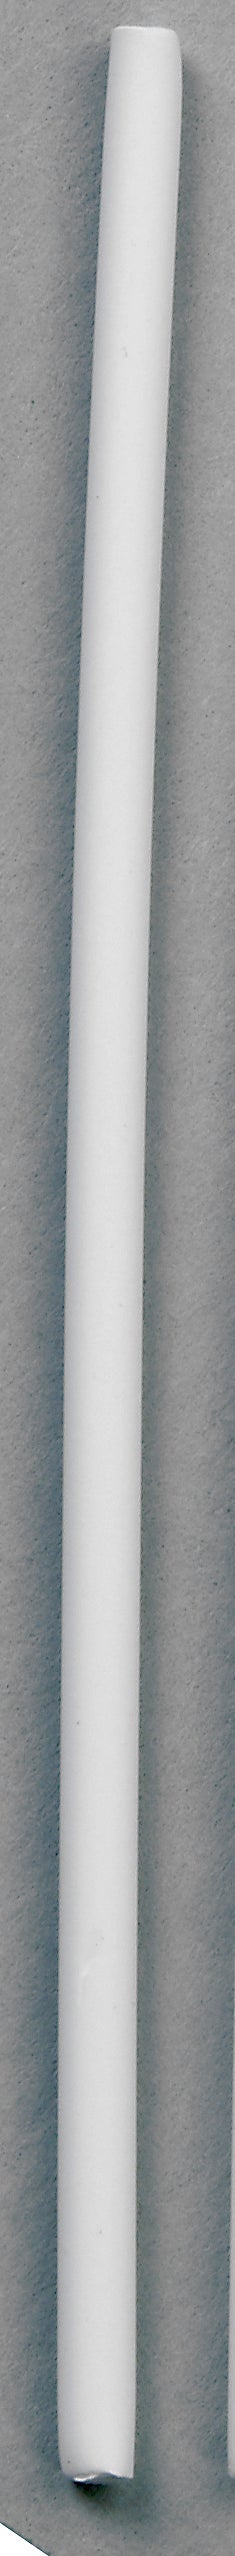 Debubbler Membranes, 8cm Tubes, pkg. of 1